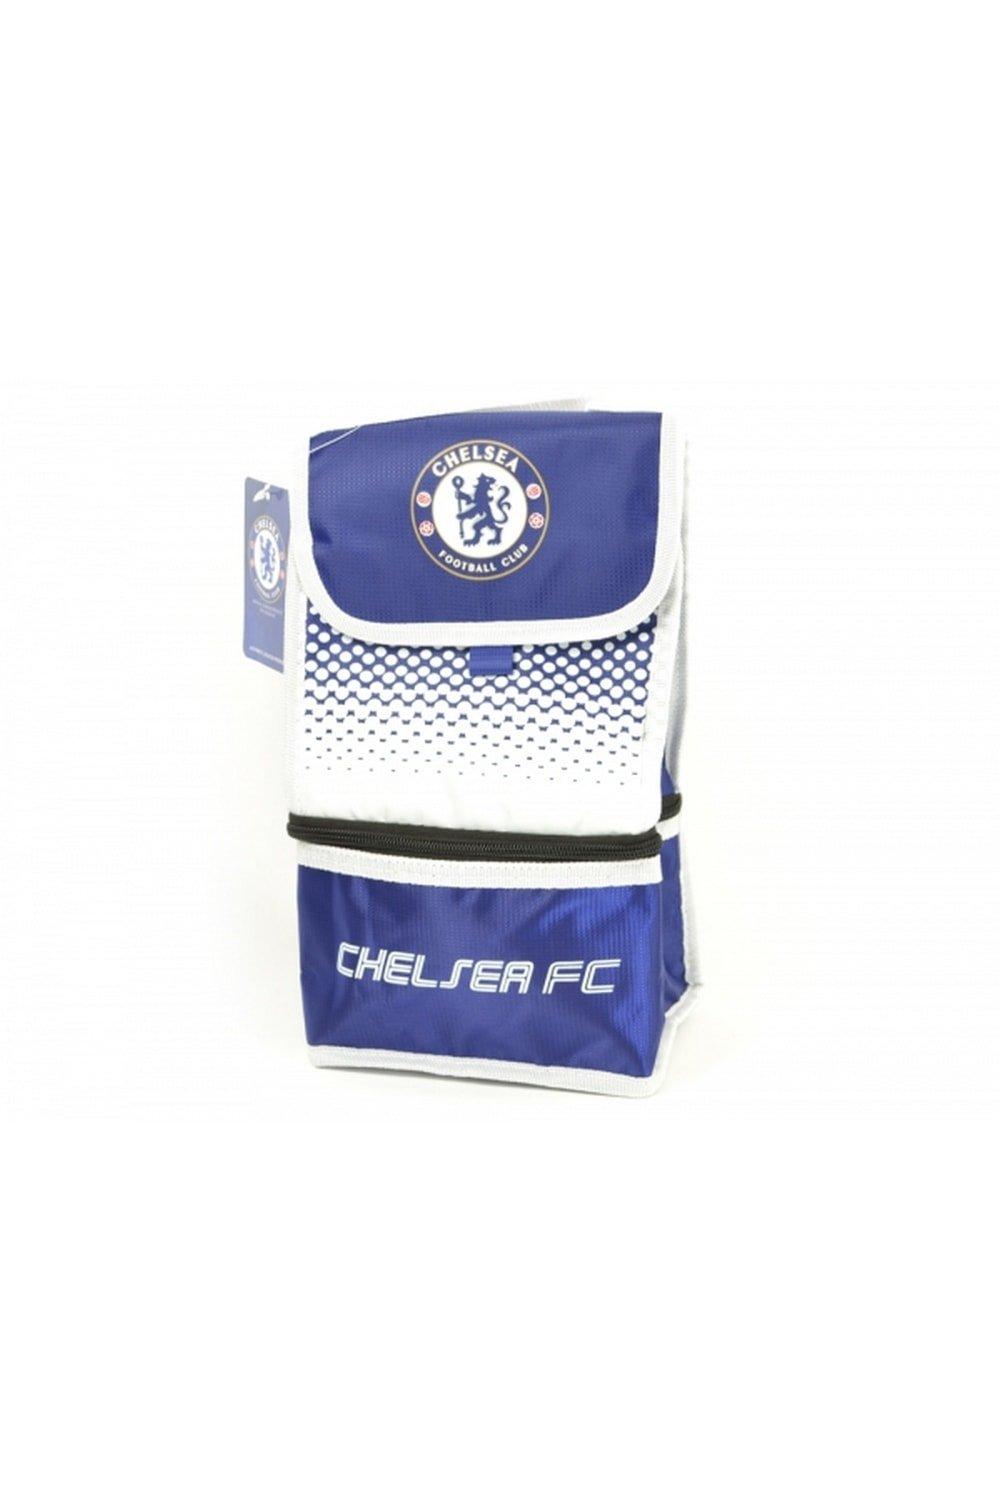 Официальная сумка для обеда Football Fade Design Chelsea FC, синий сумка для ланча обеда и завтрака